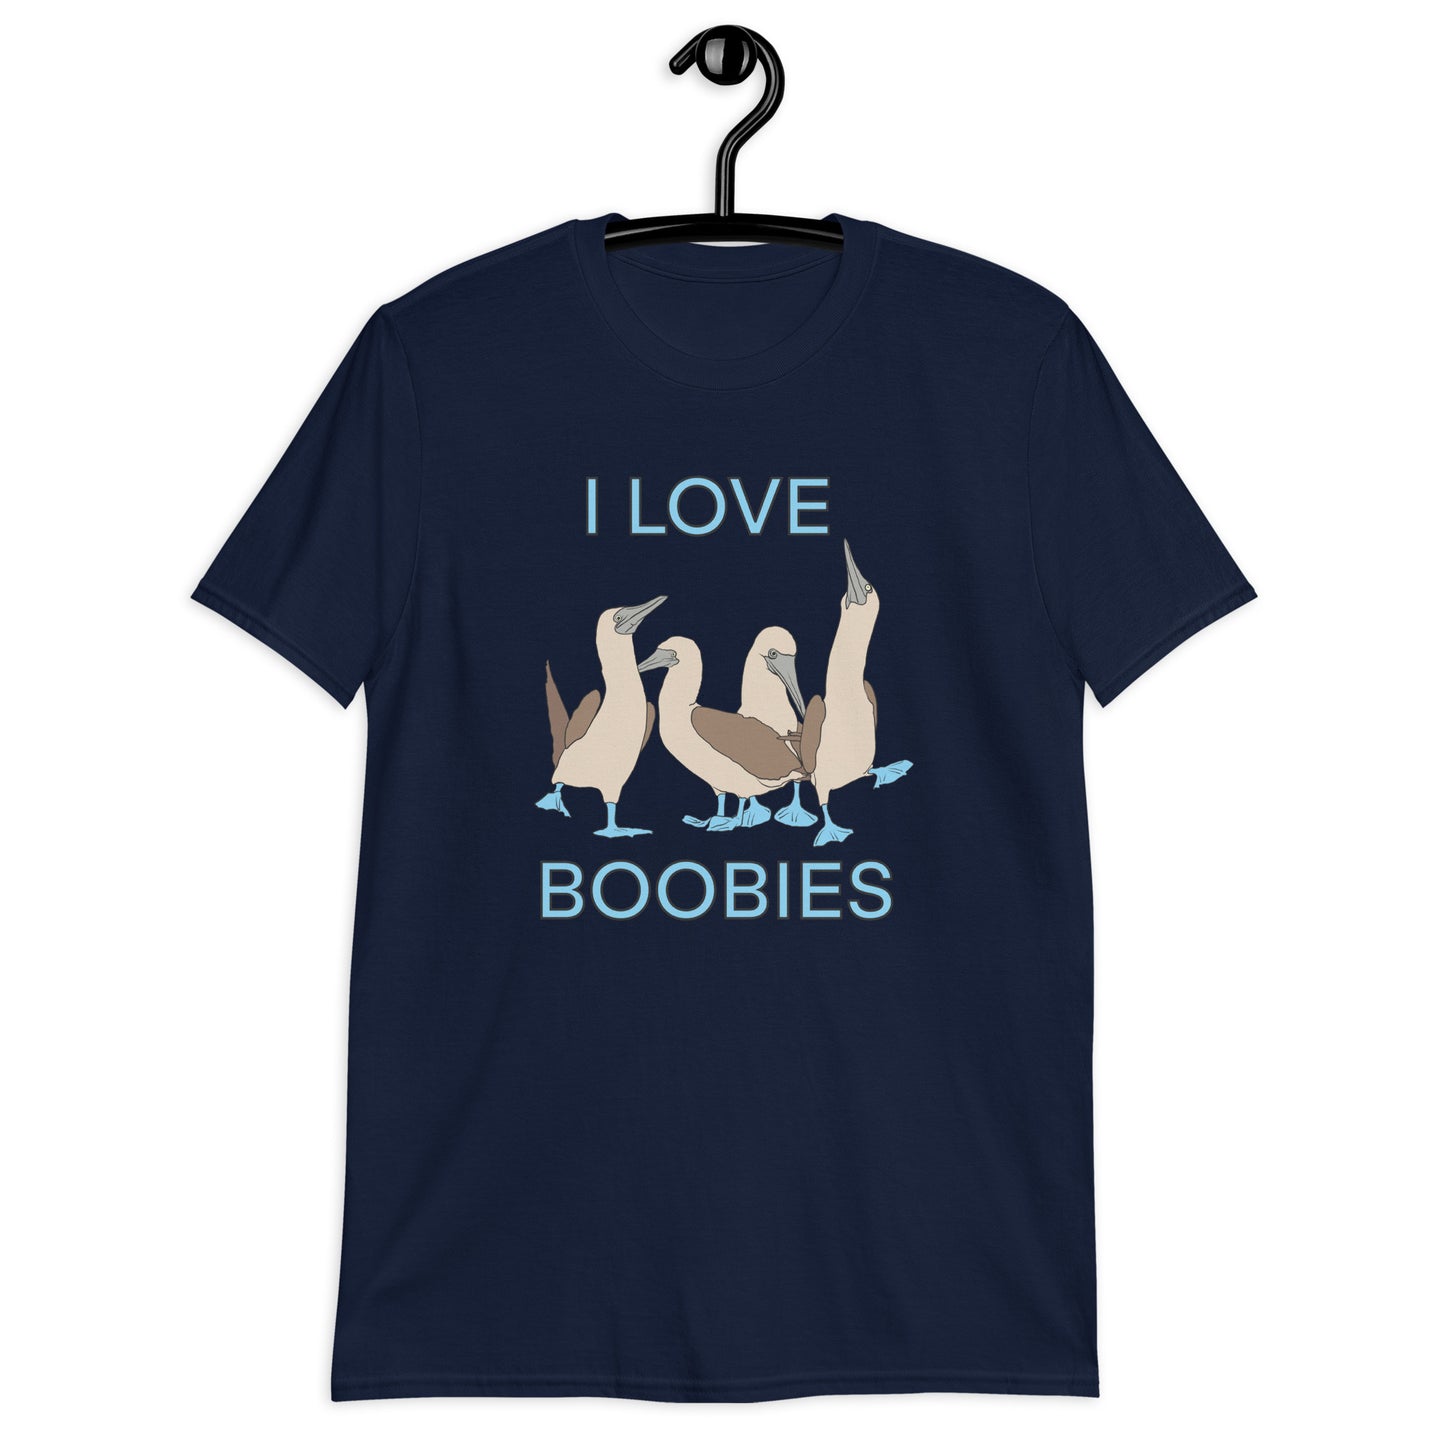 I Love Boobies T-Shirt